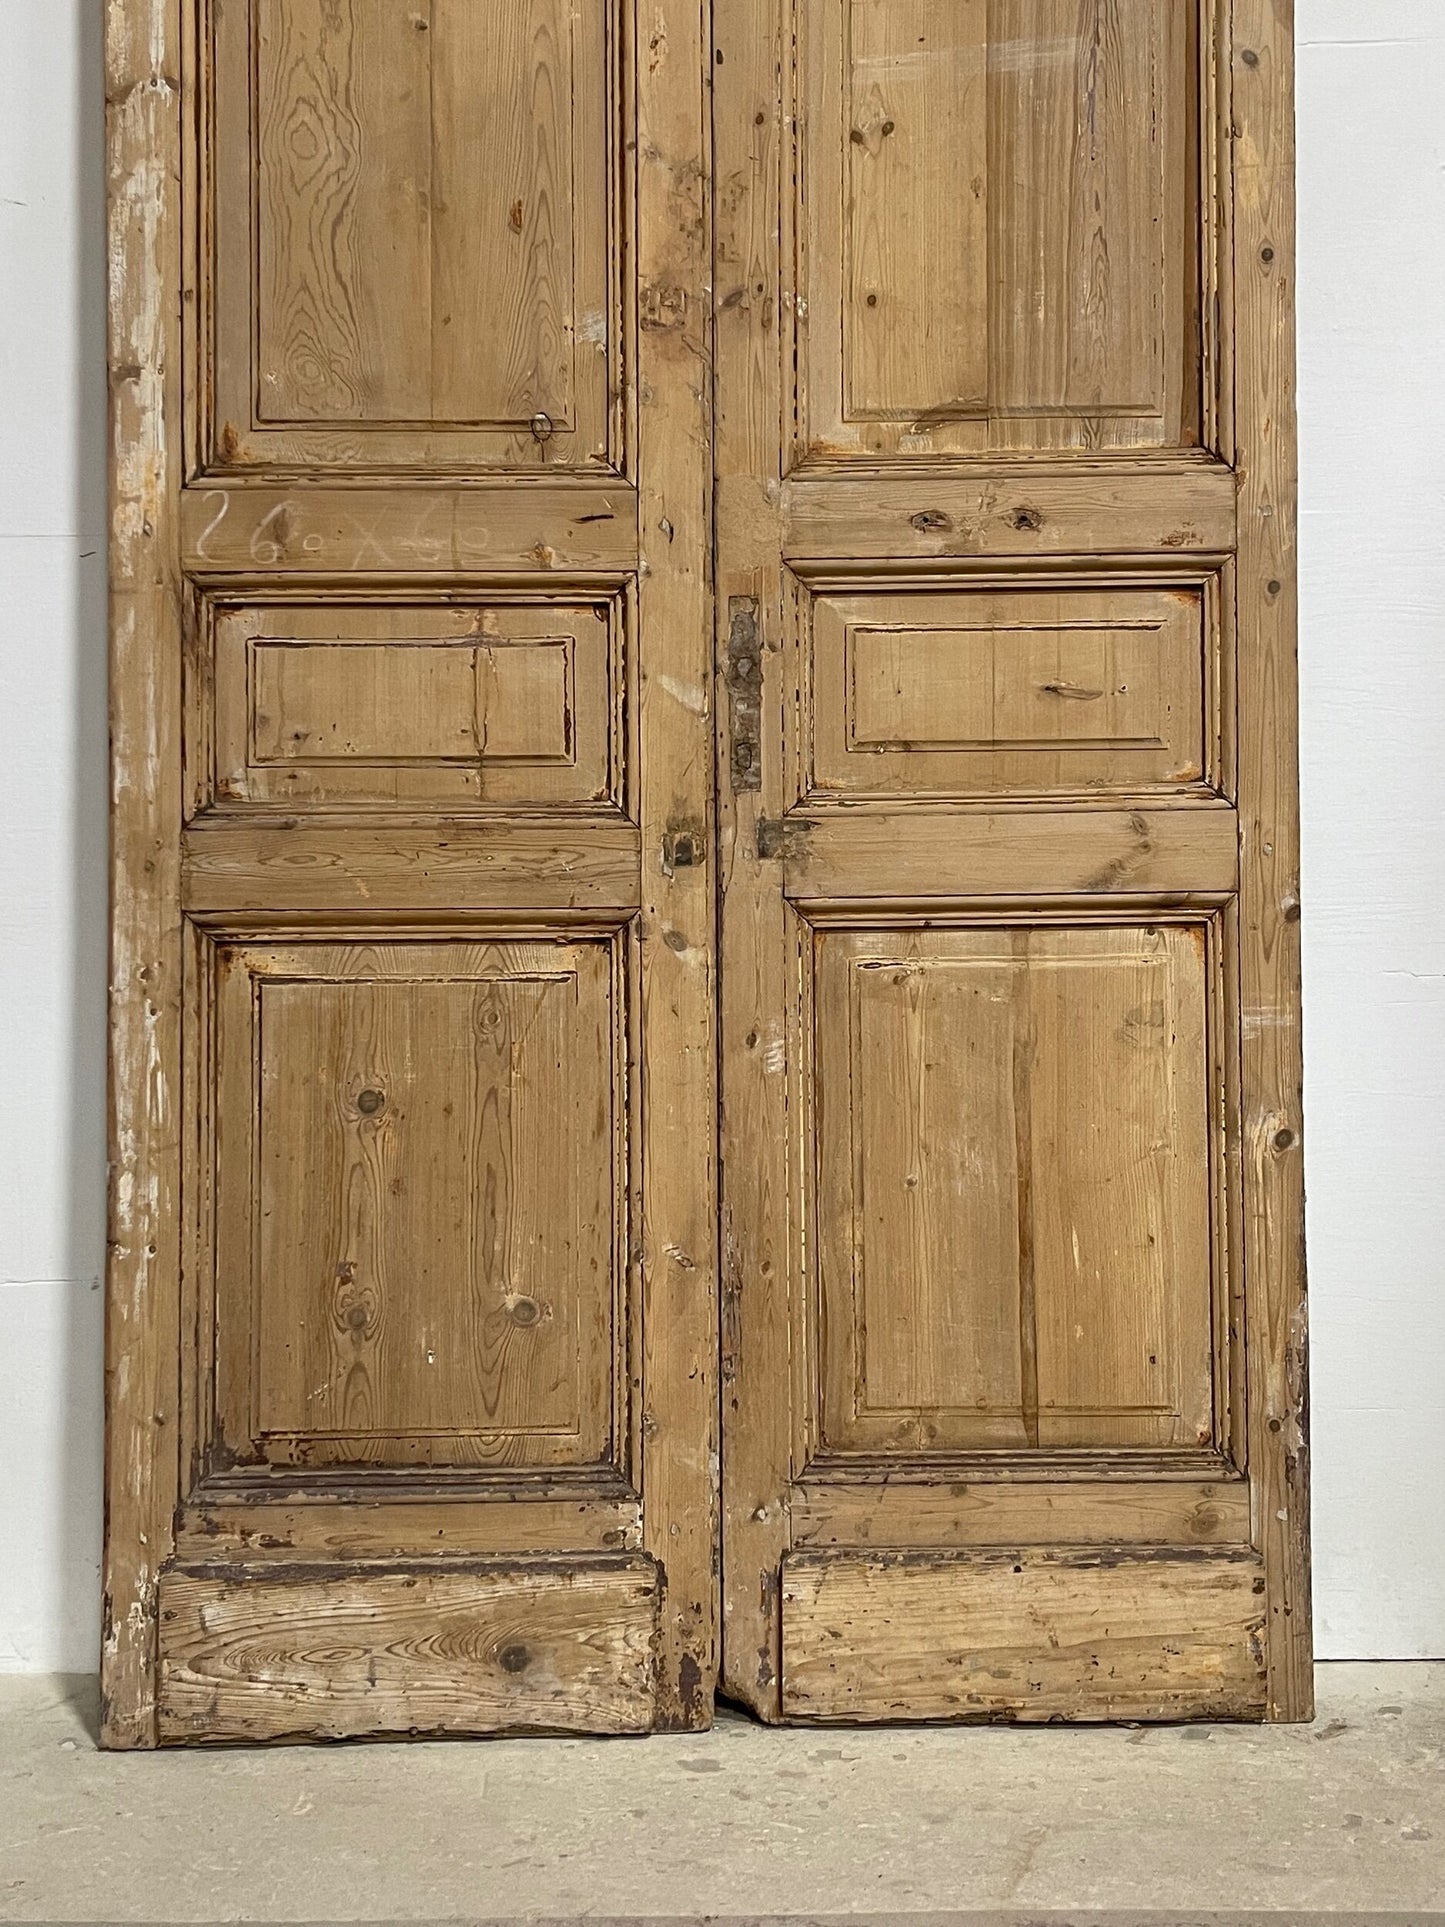 Antique French panel doors (103x46.75) I179b